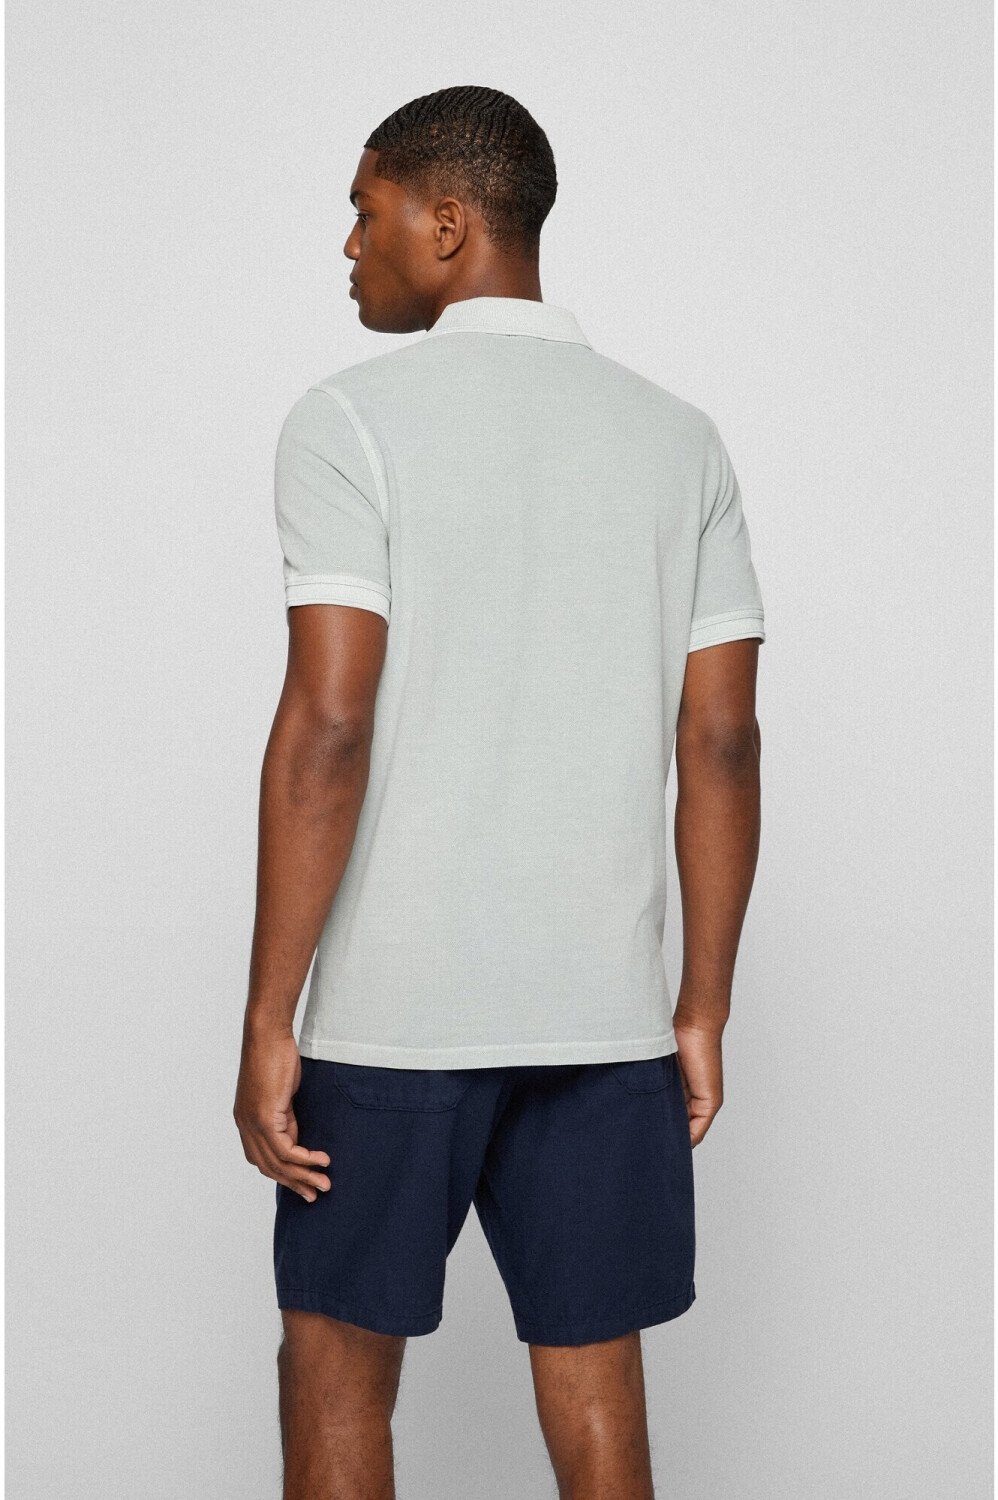 Hugo Boss Prime Slim-Fit Poloshirt (50468576-043) grey ab 54,00 € |  Preisvergleich bei